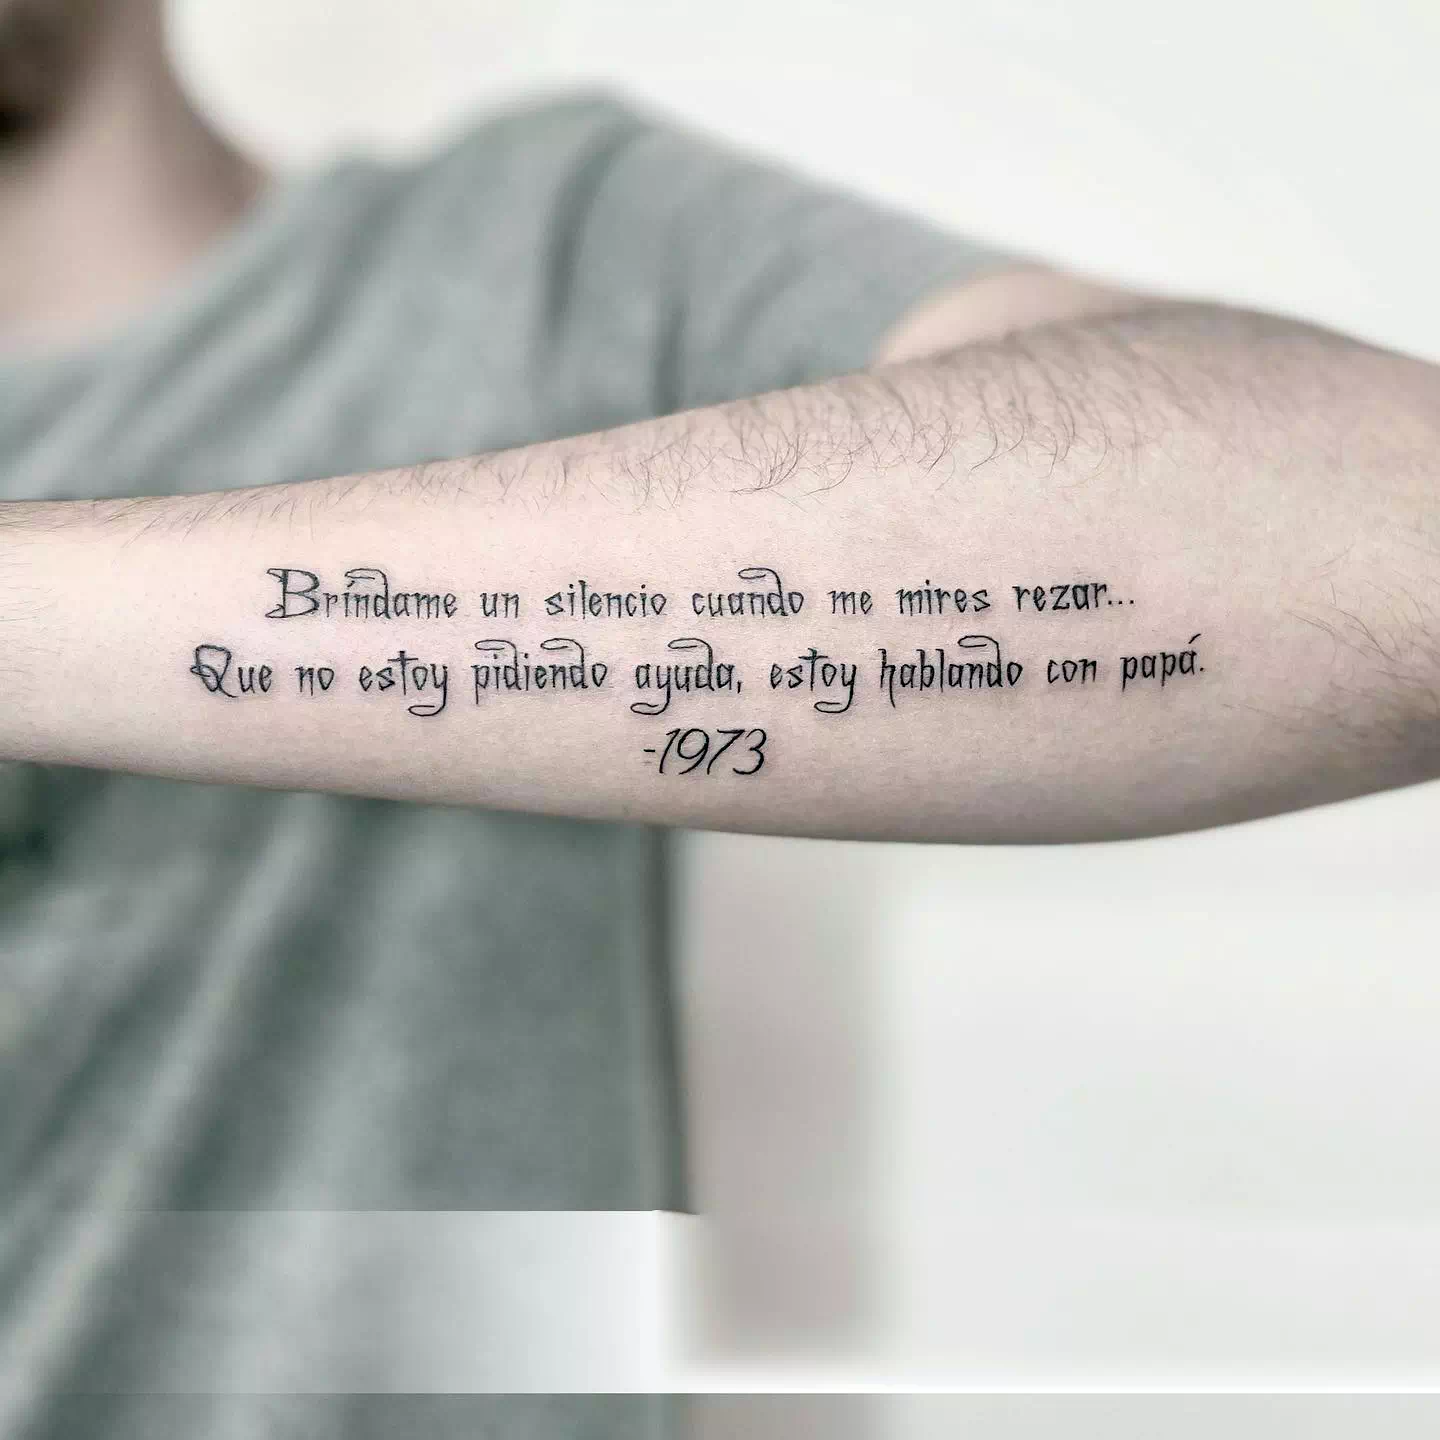 Novel quote tattoo 3